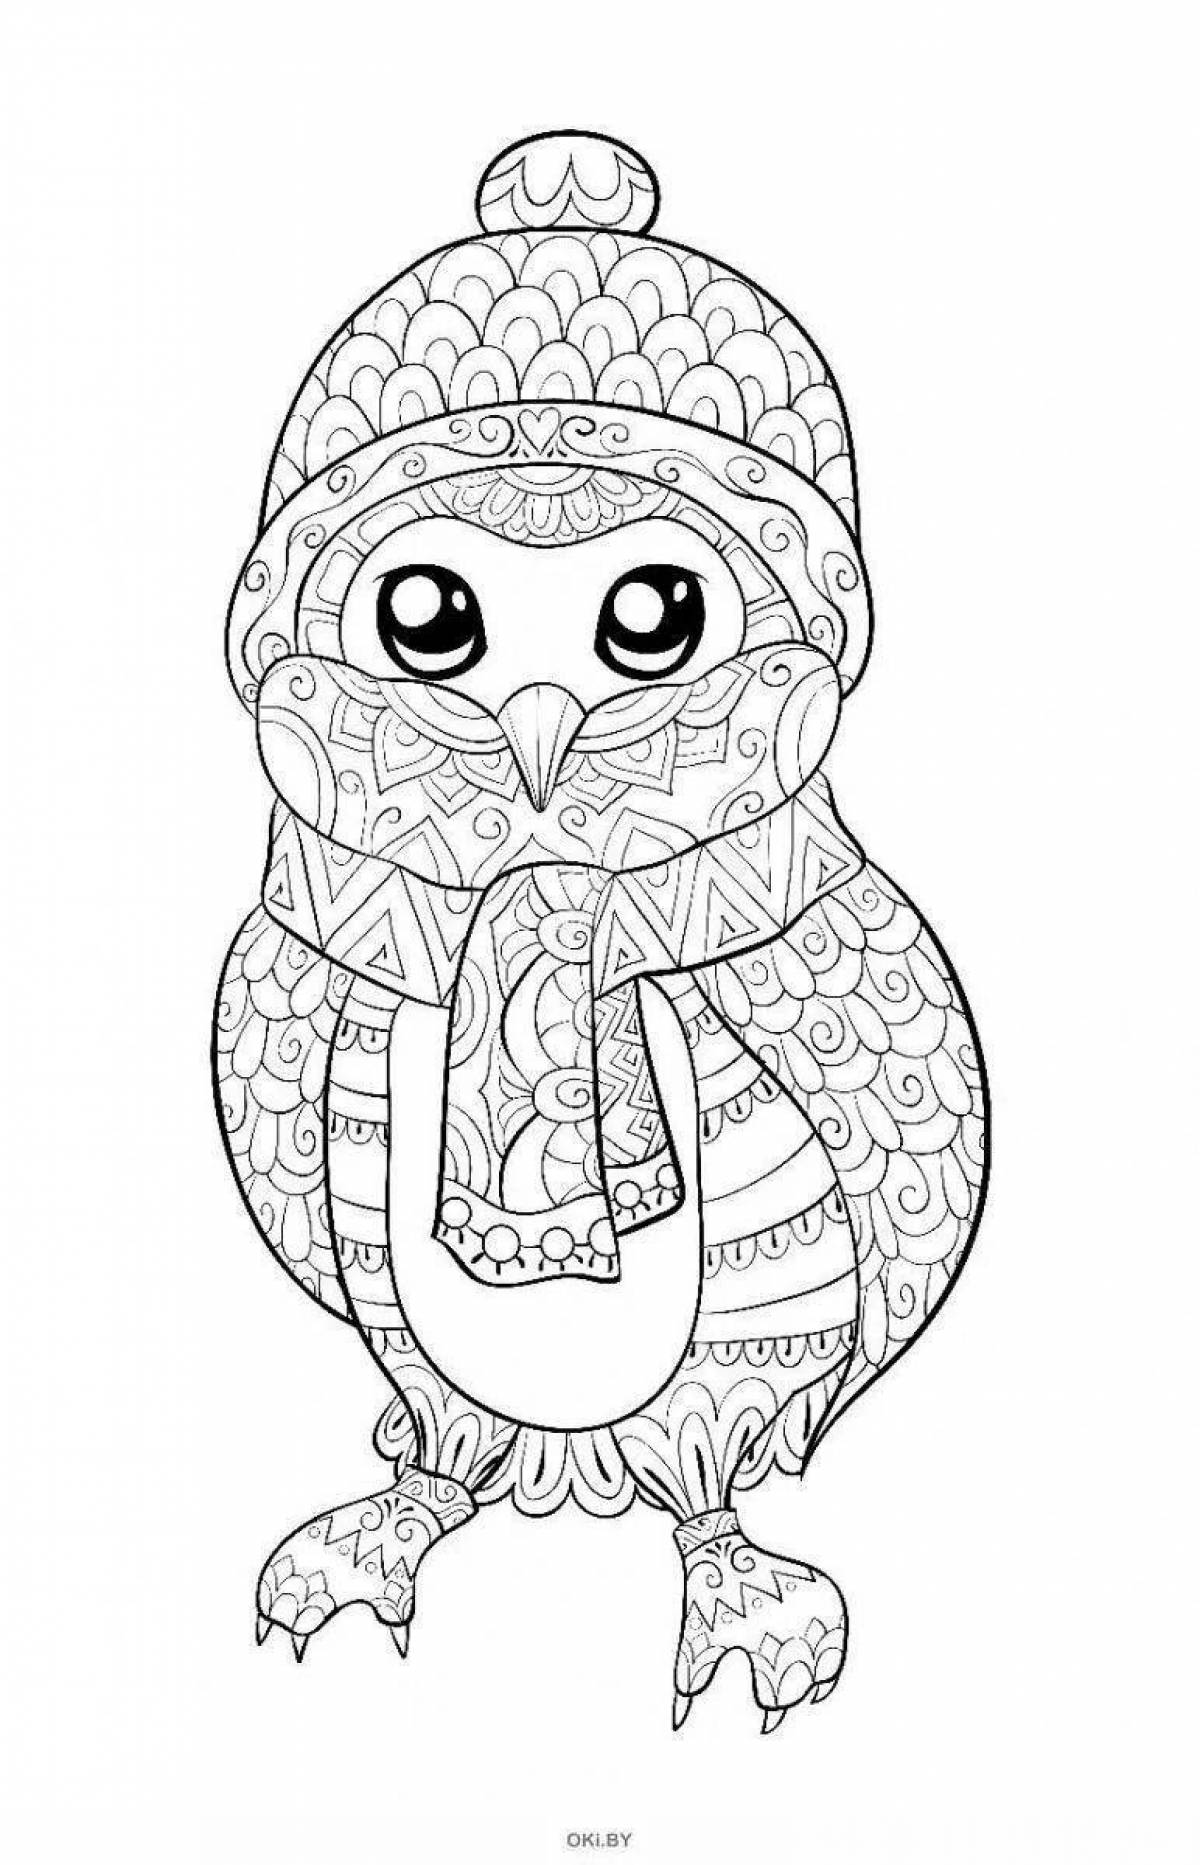 Coloring page playful christmas owl